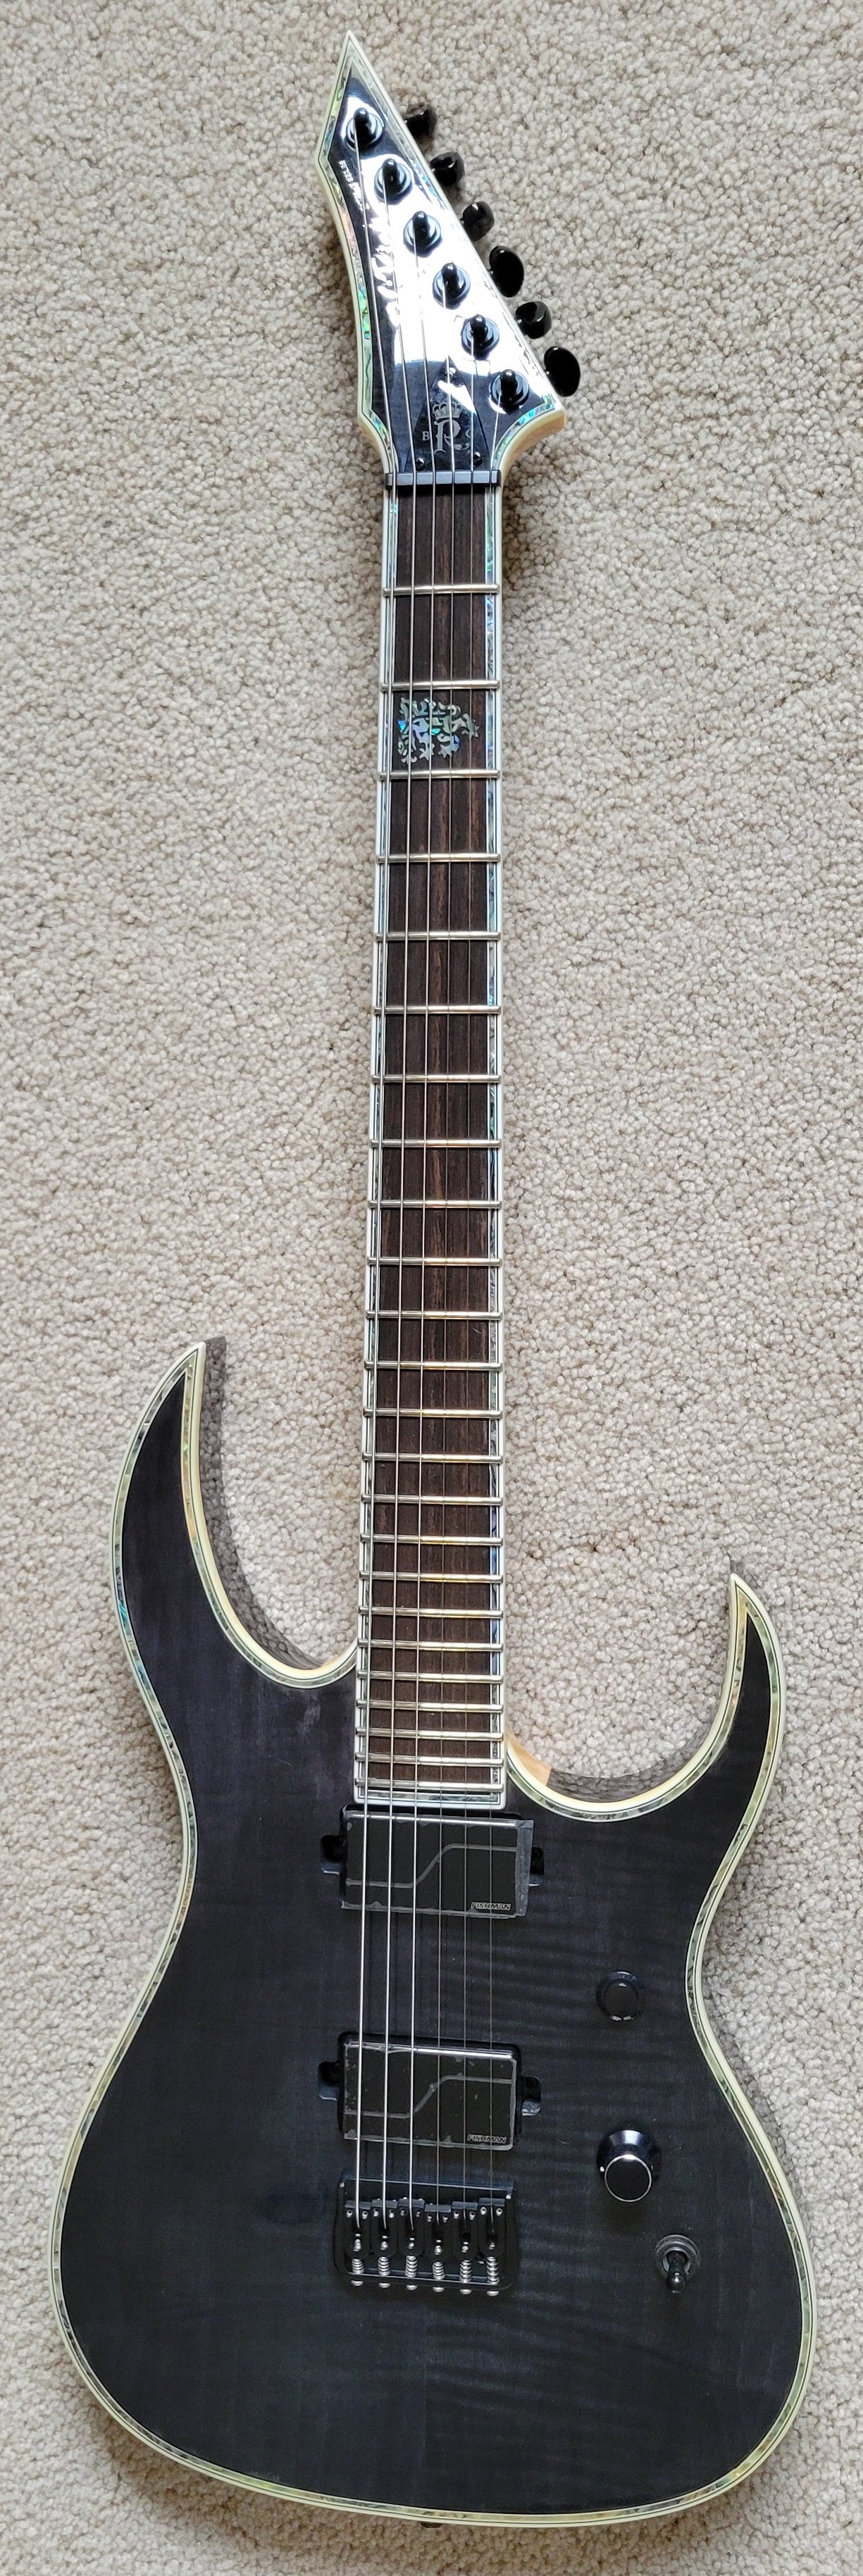 B.C. Rich Shredzilla Extreme Exotic Electric Guitar, Trans Black, New Hard Shell Case